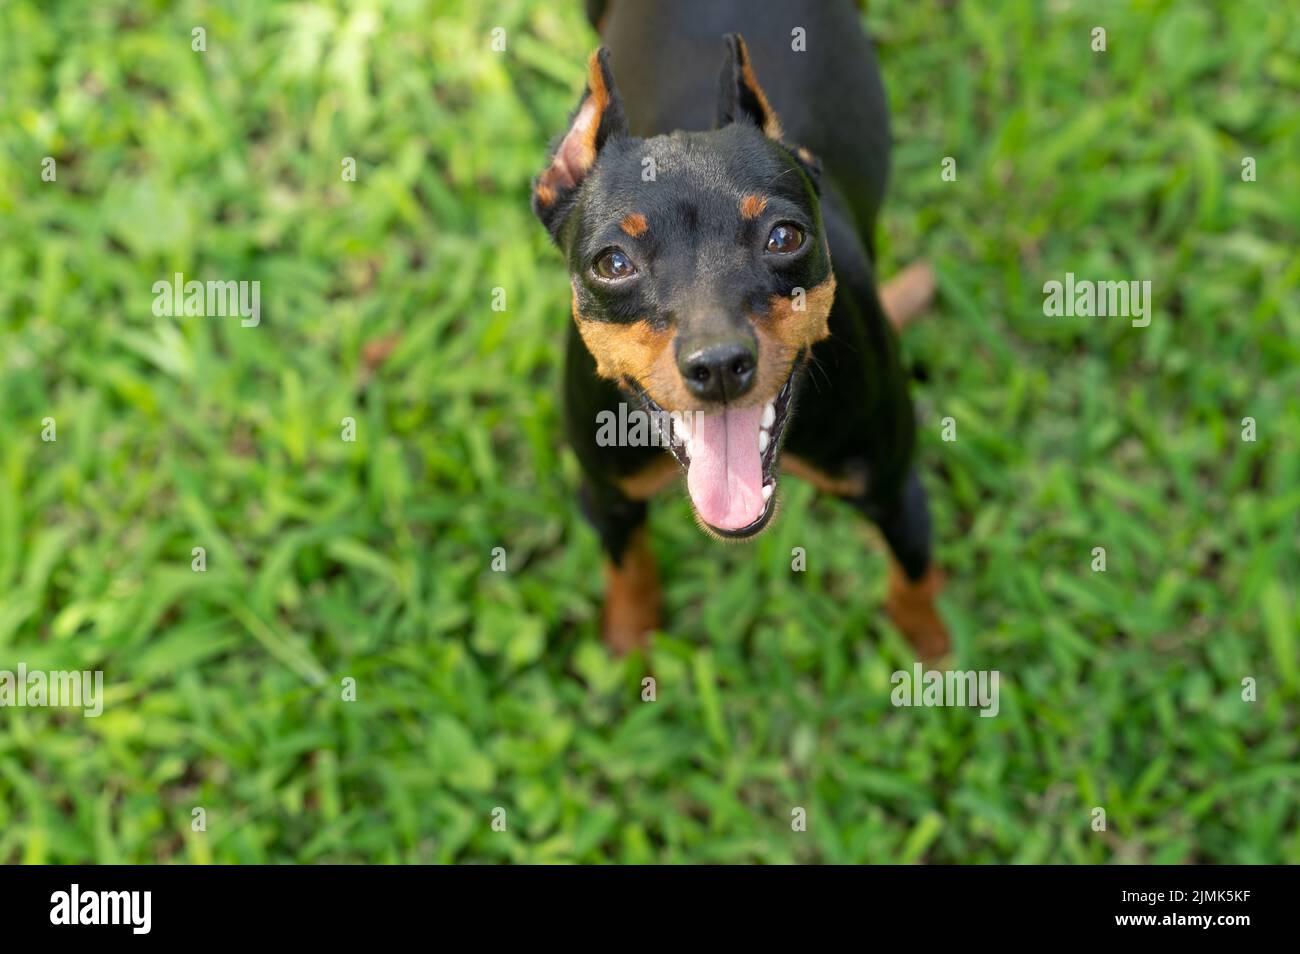 Smiley pincher dog portrait on green grass background Stock Photo